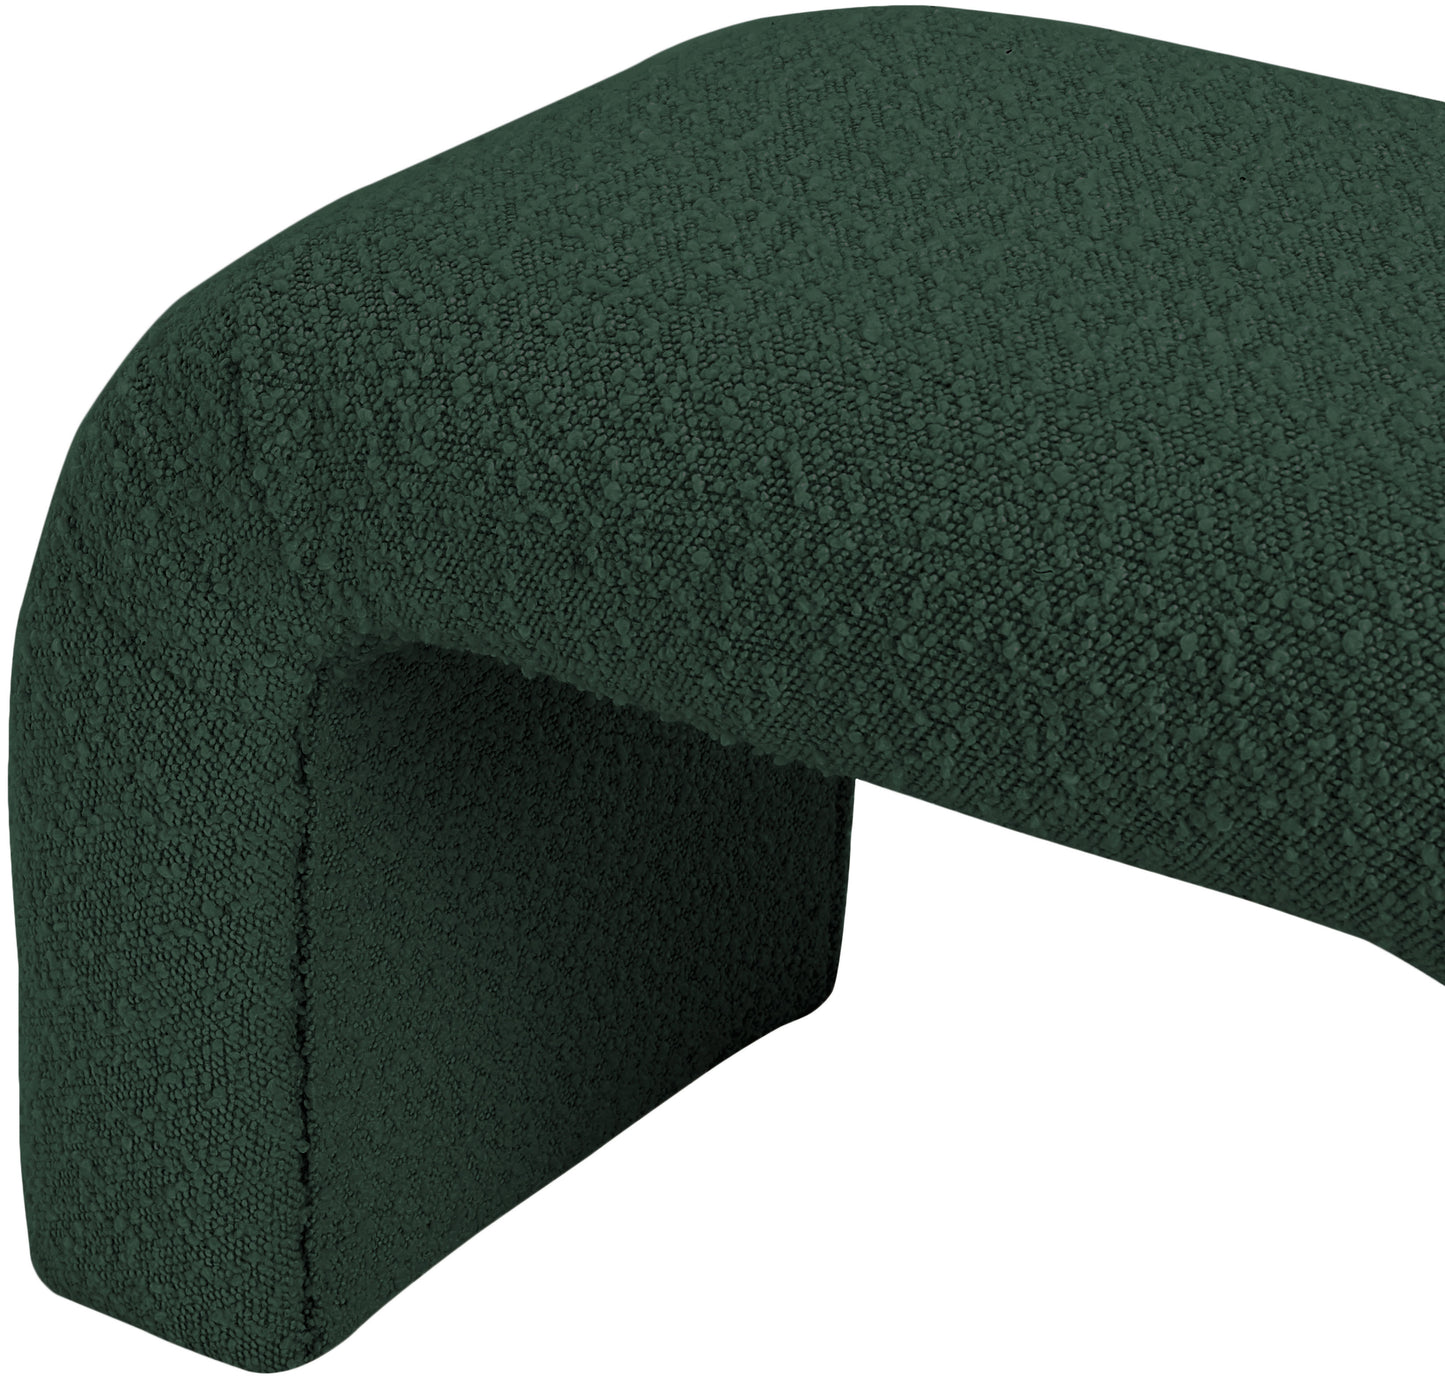 fritz green boucle fabric bench green